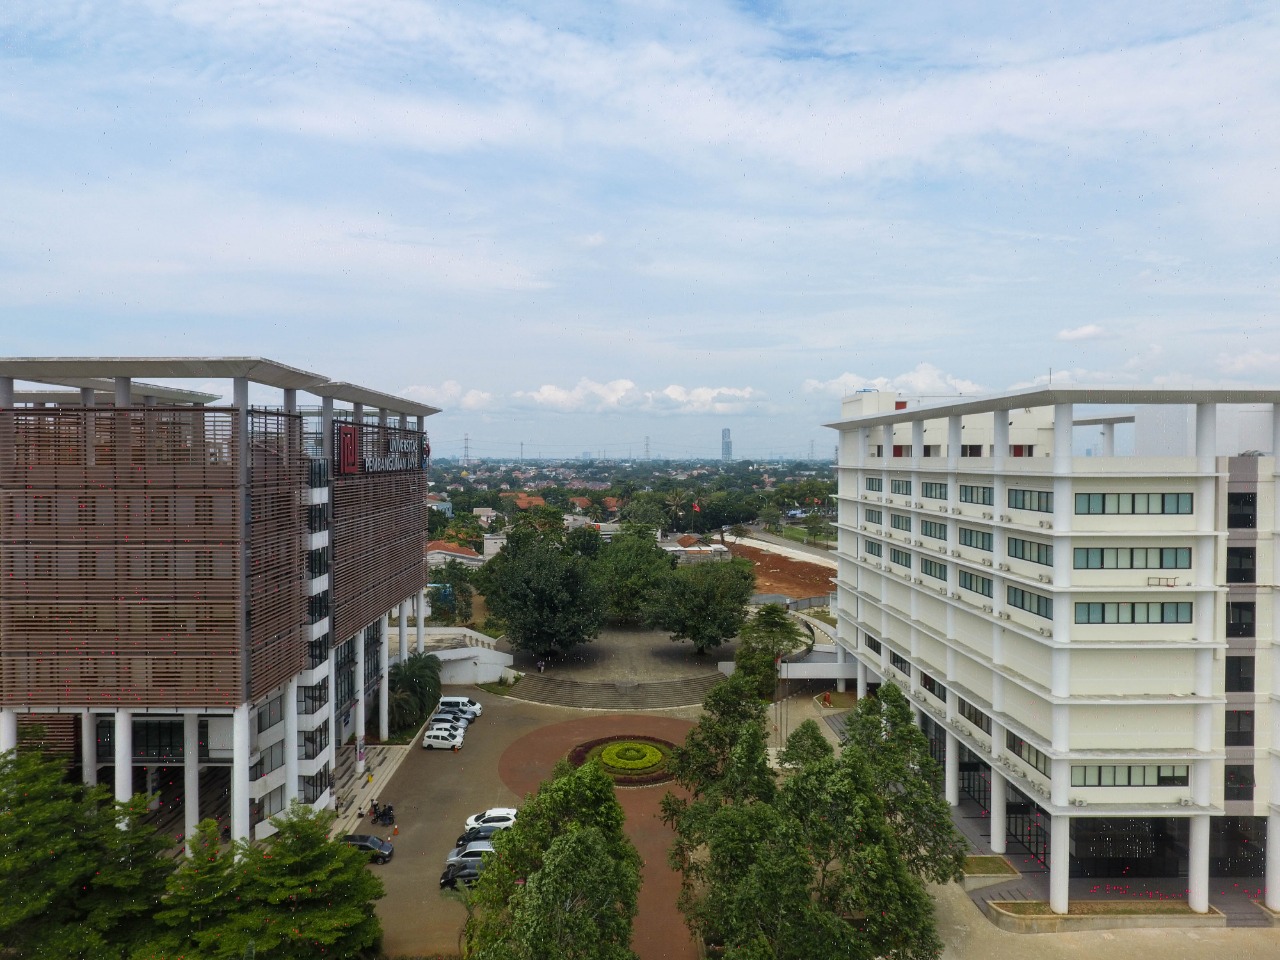 Tampak satu unit gedung Universitas Pembangunan Jaya (UPJ) Kota Tangerang Selatan.